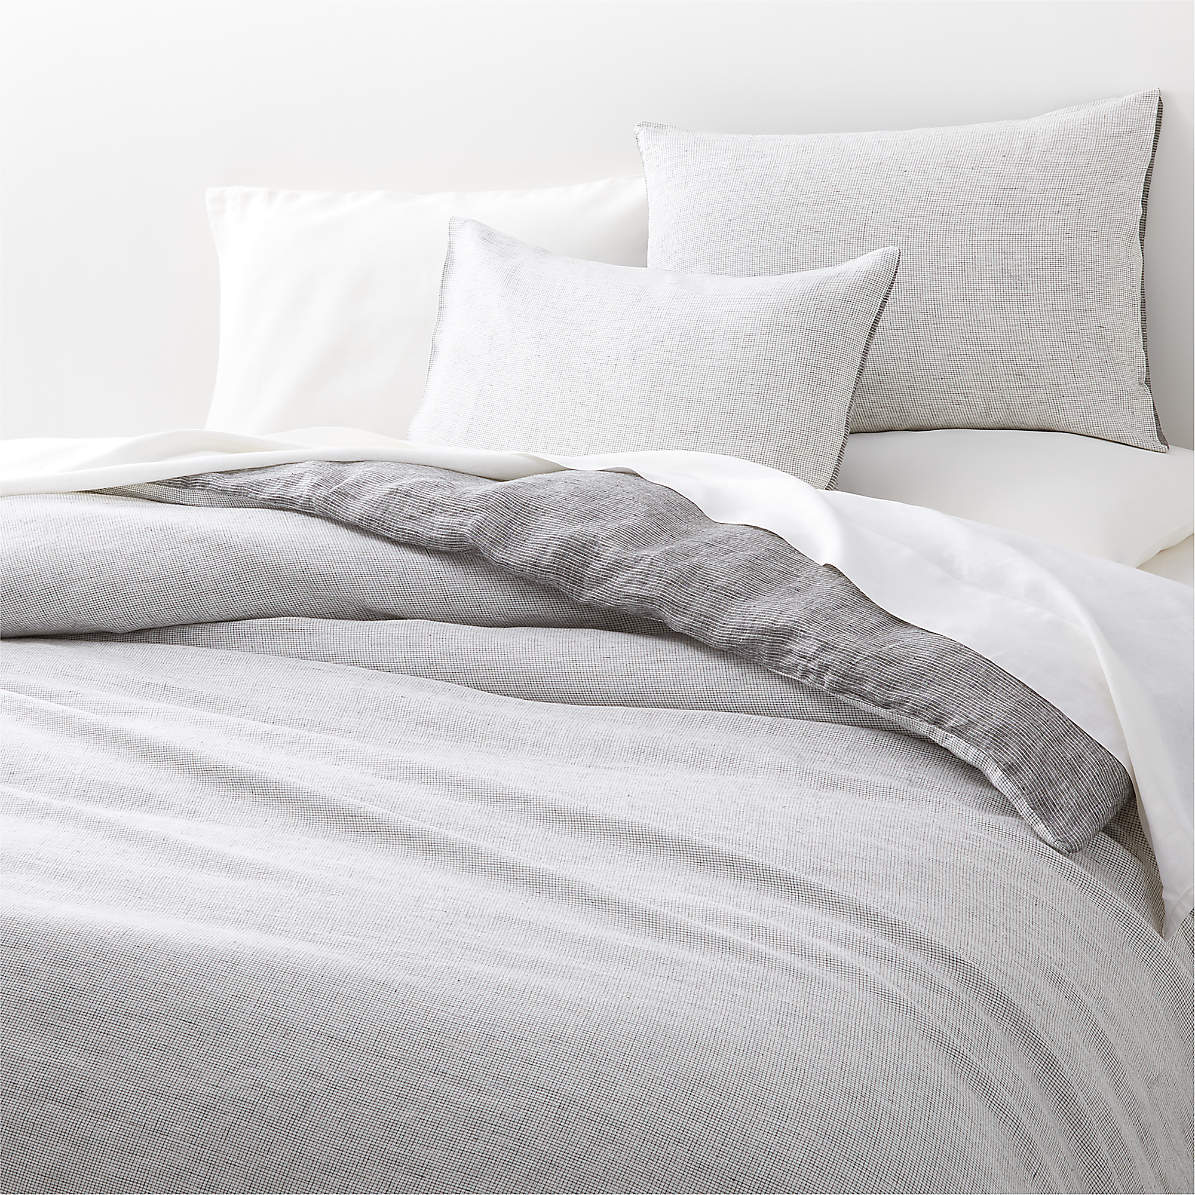 Reversible Duvet Cover with Pillow Case Bedding Set Design Natural 